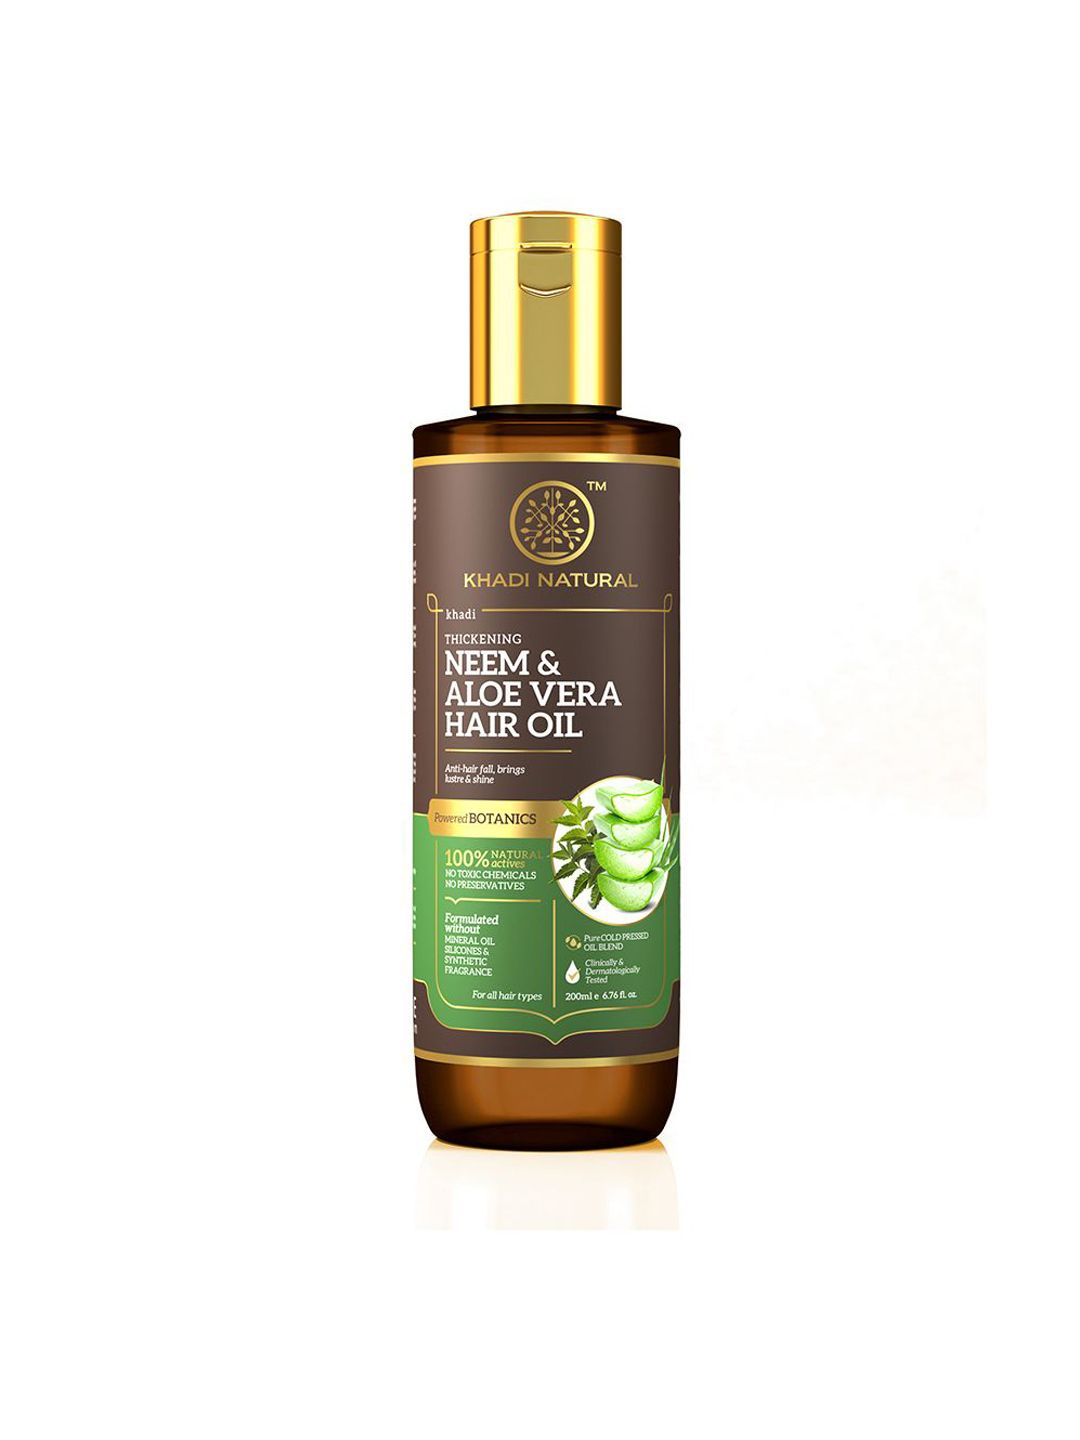 Khadi Natural Neem & Aloevera Hair Oil 200 ml Price in India